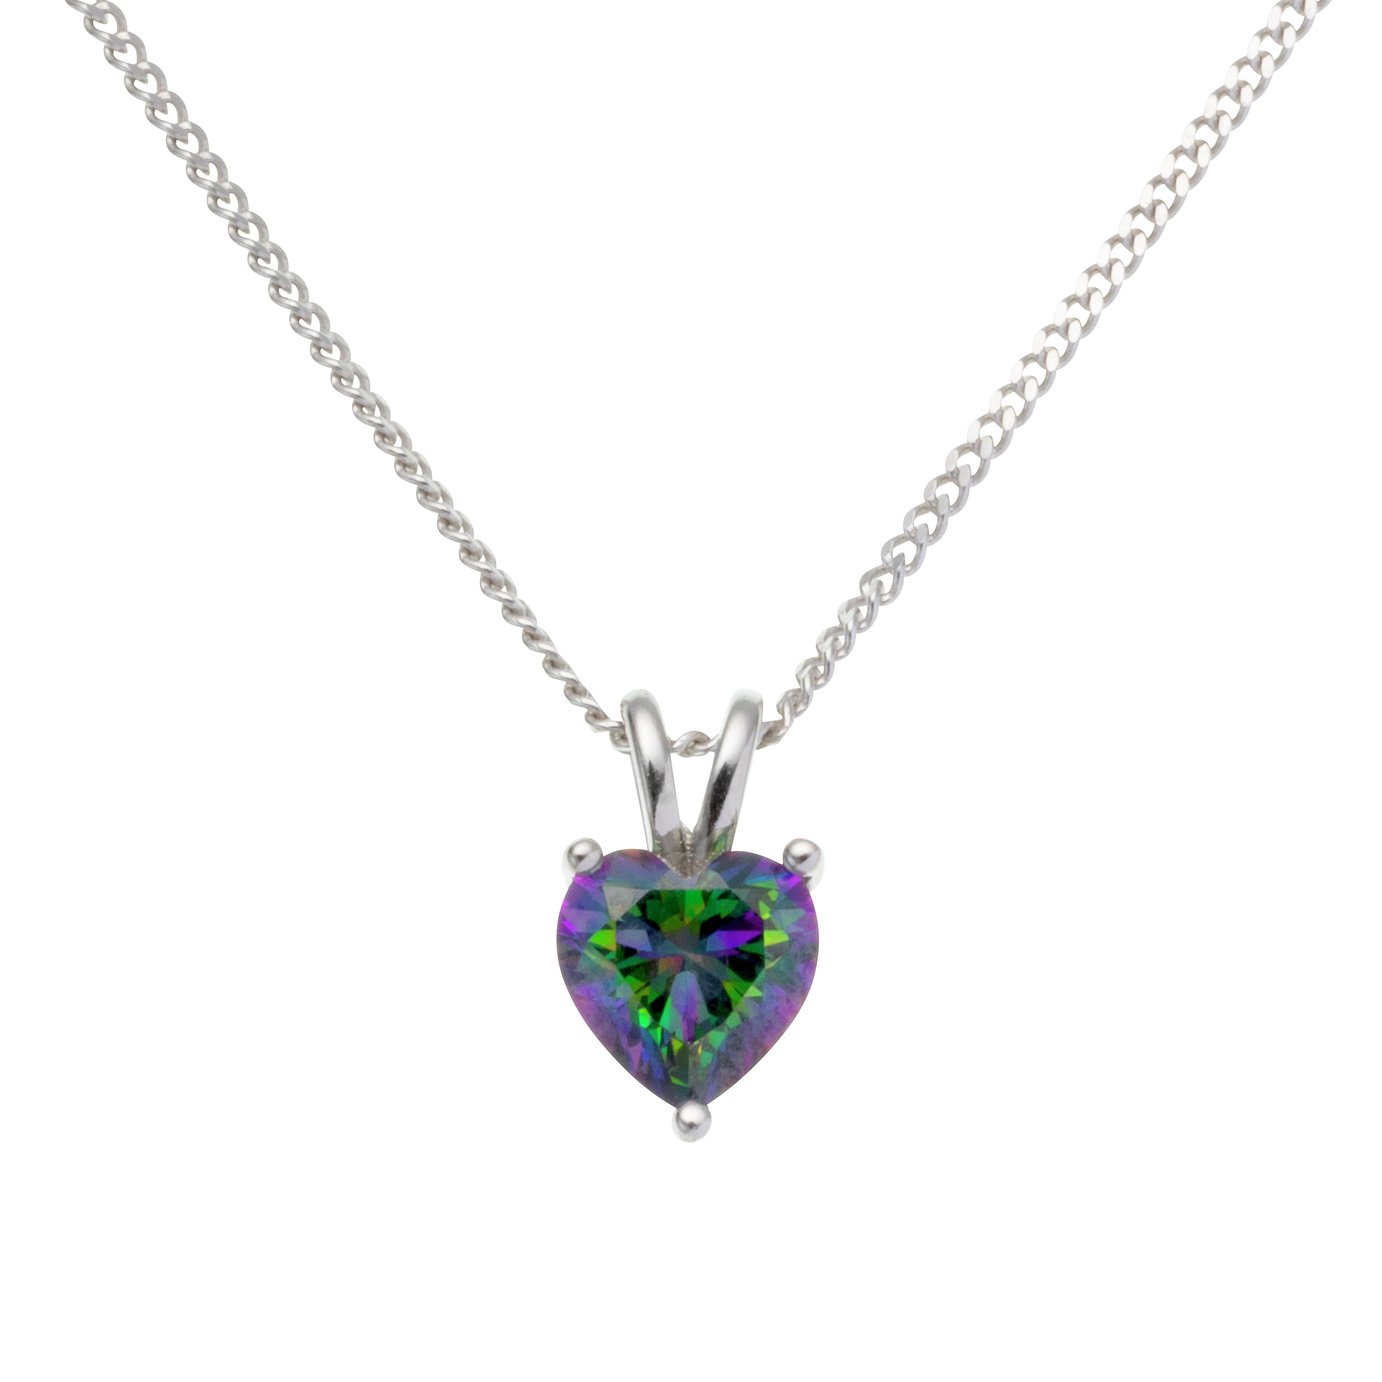 Revere Sterling Silver Cubic Zirconia Mystic Heart Pendant